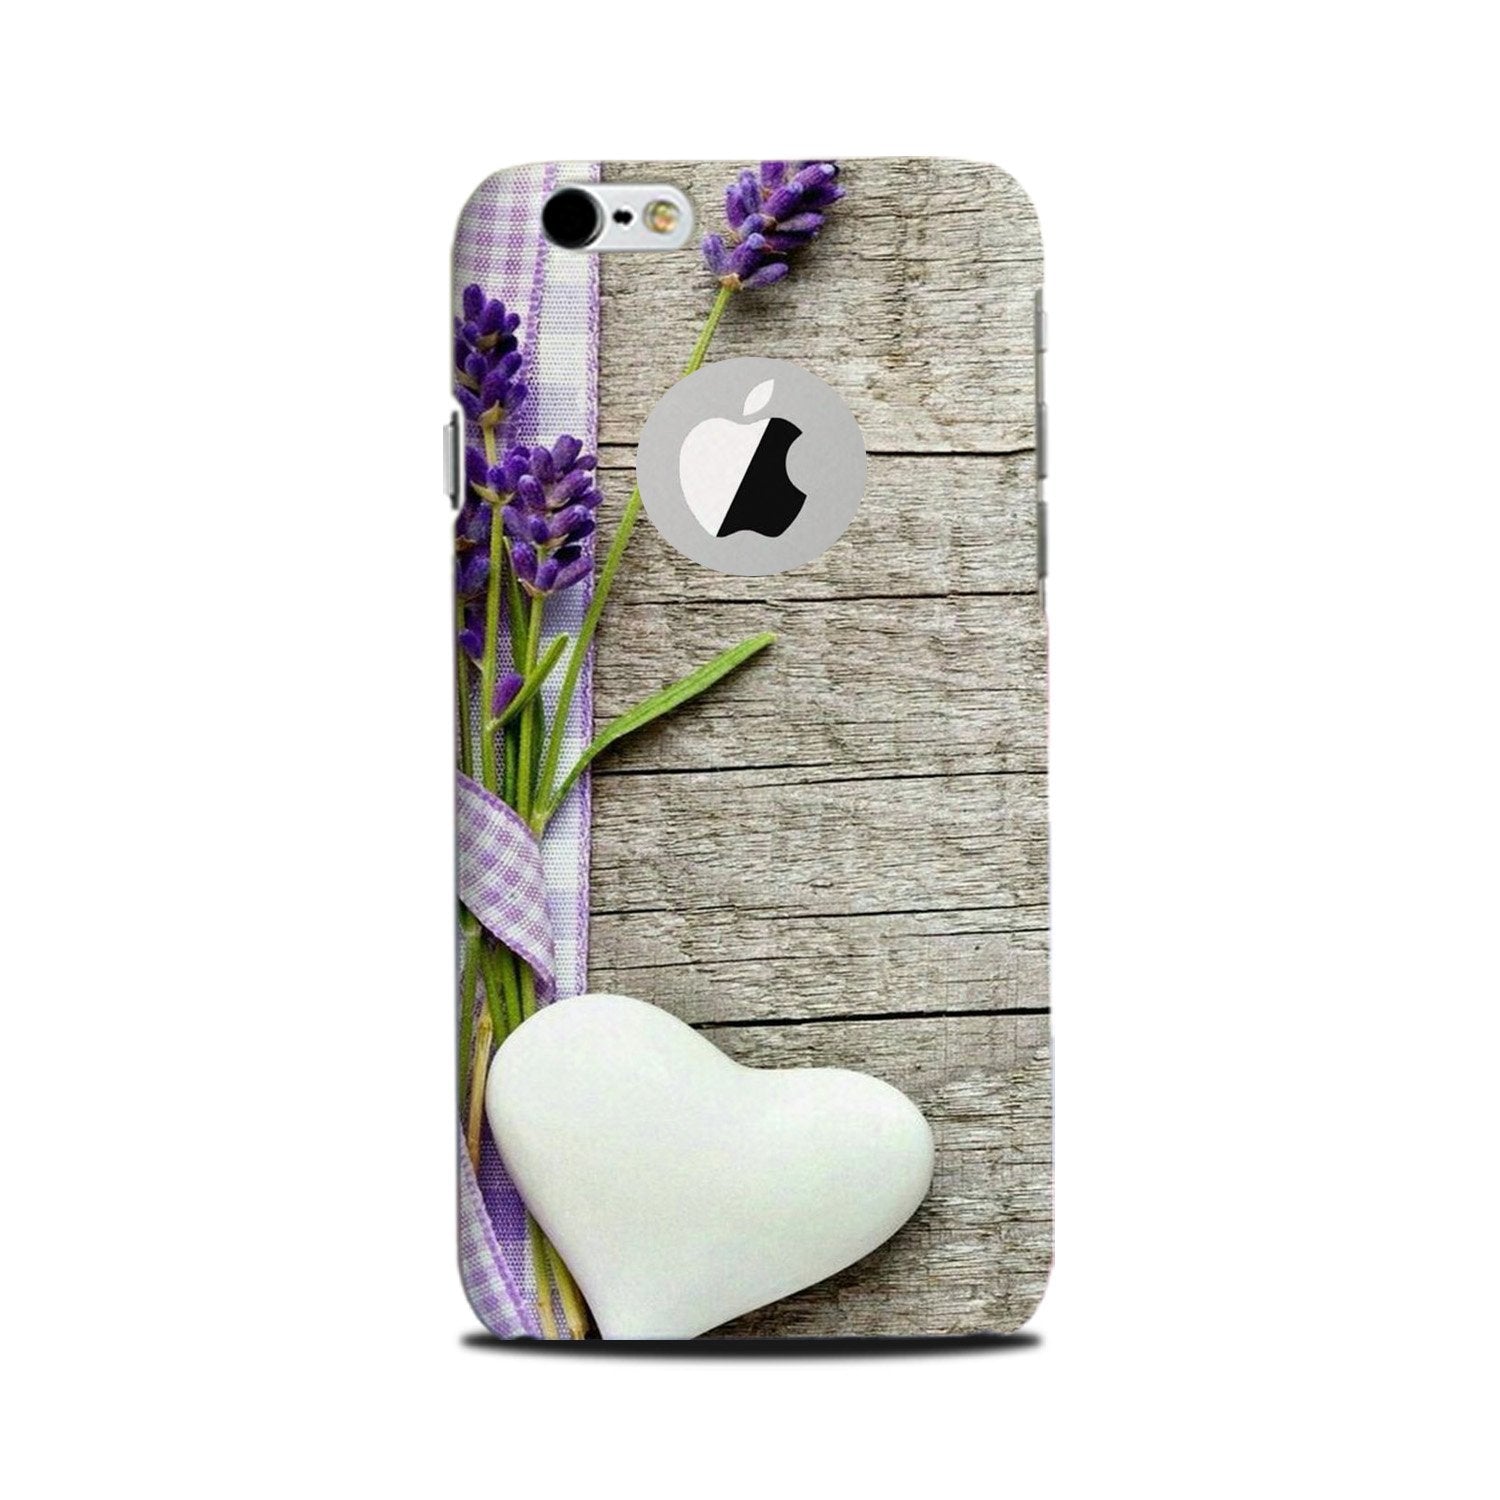 White Heart Case for iPhone 6 Plus / 6s Plus logo cut  (Design No. 298)